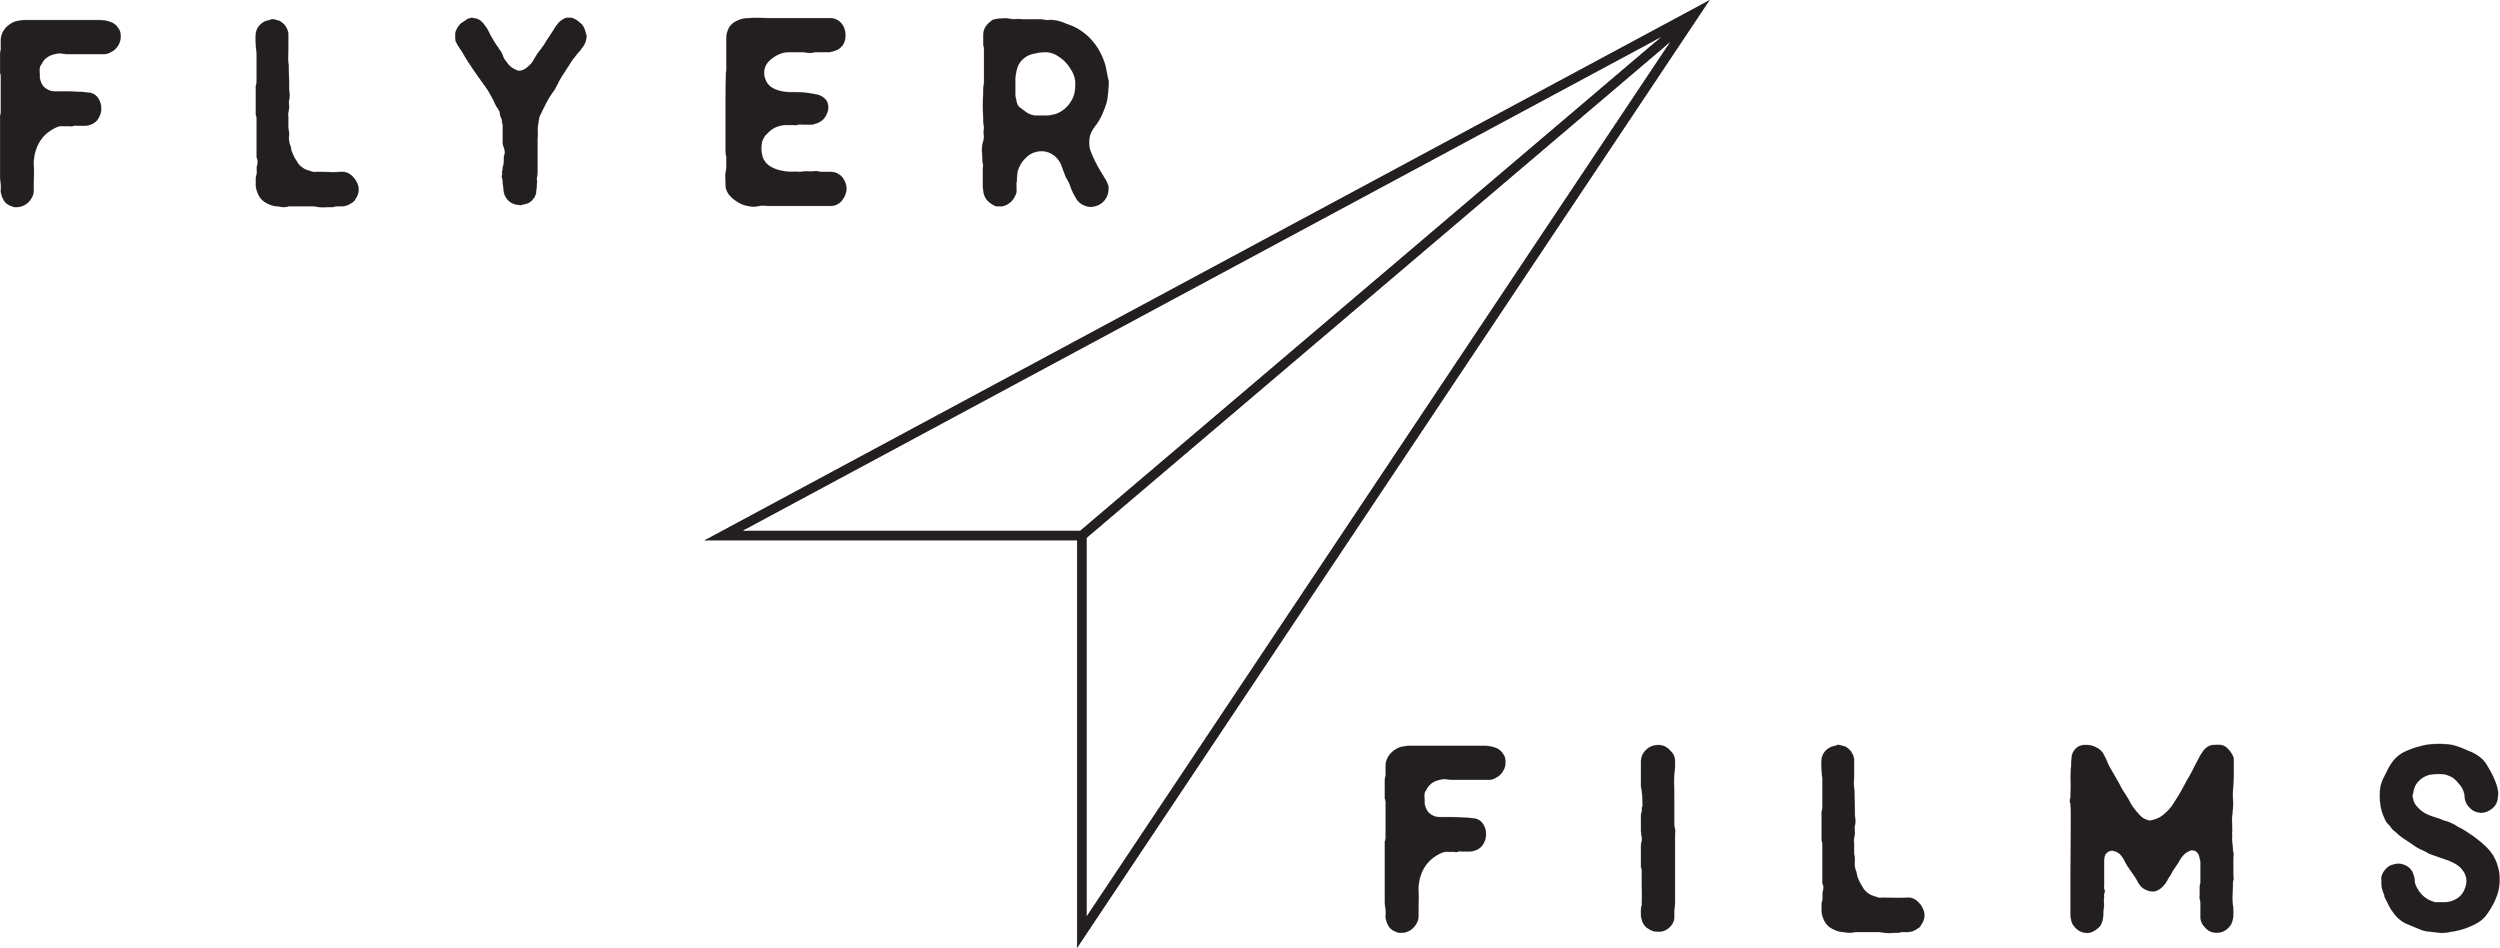 Flyer Films Logo